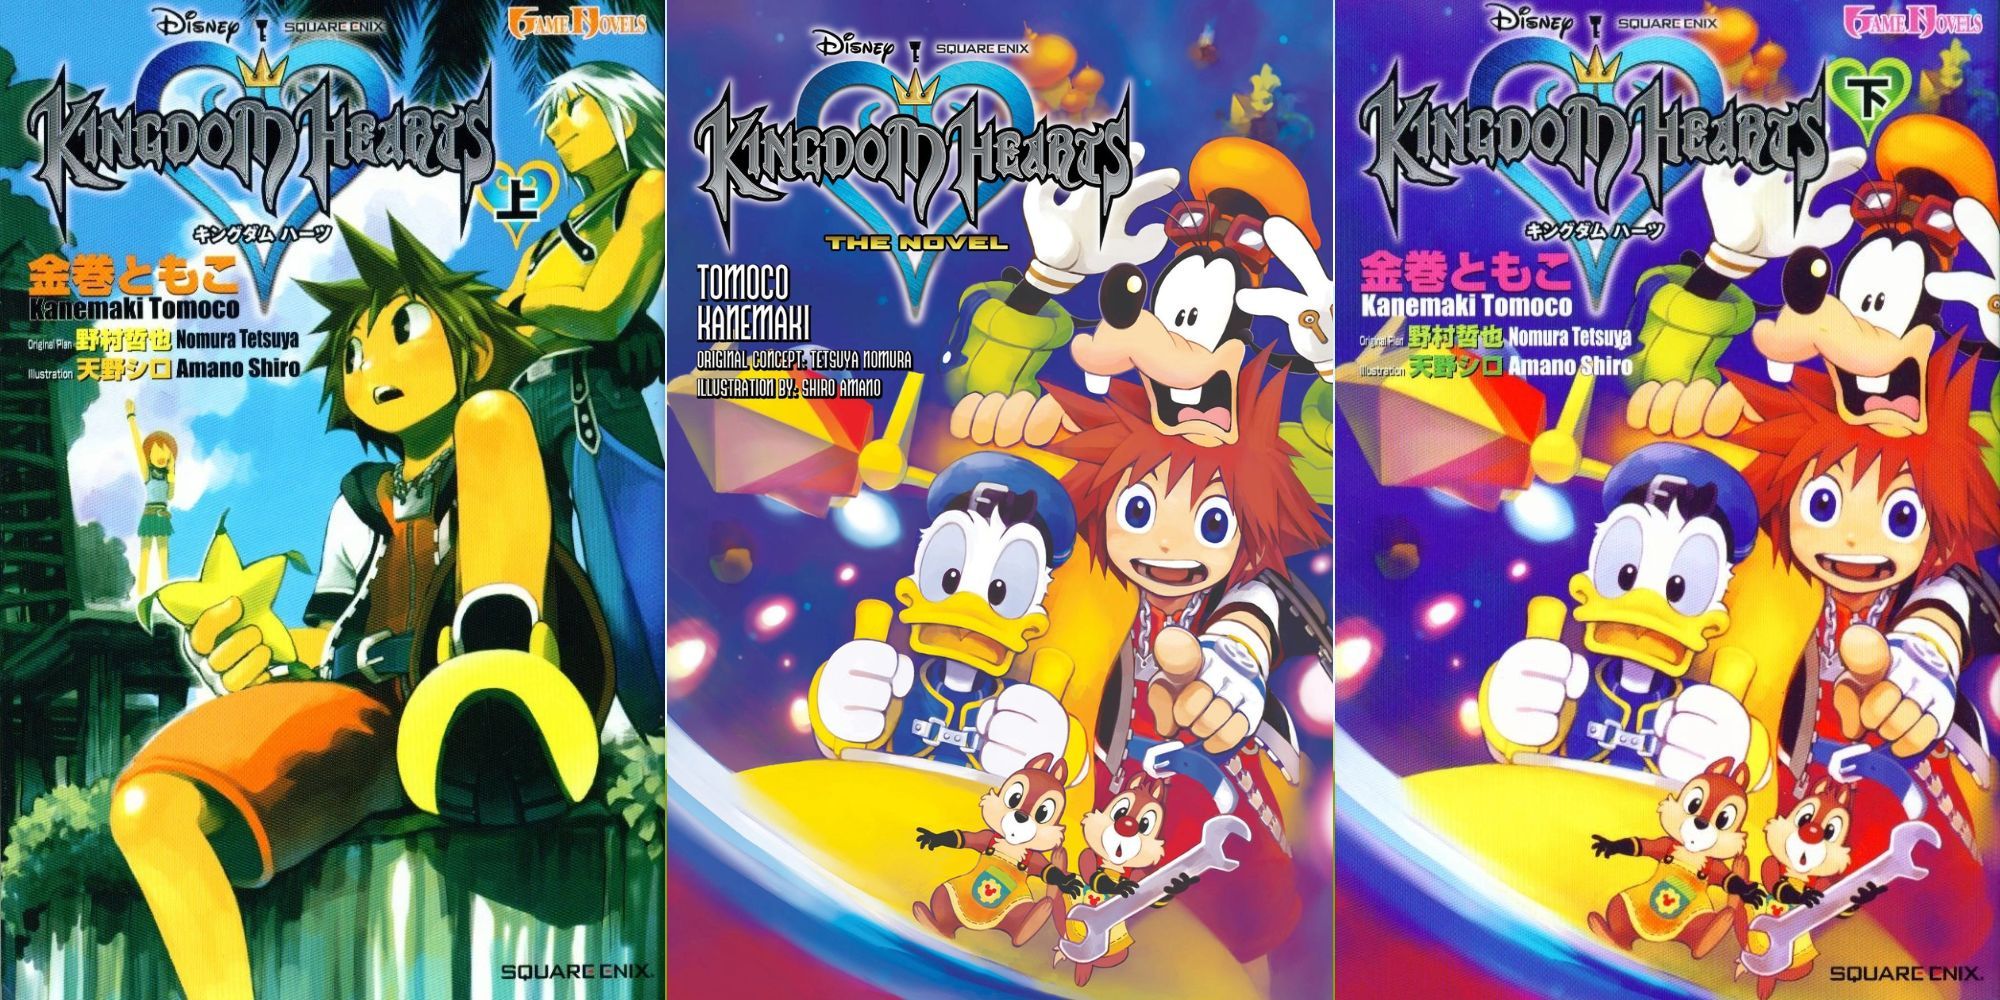 Kingdom Hearts novel in both English and Japanese